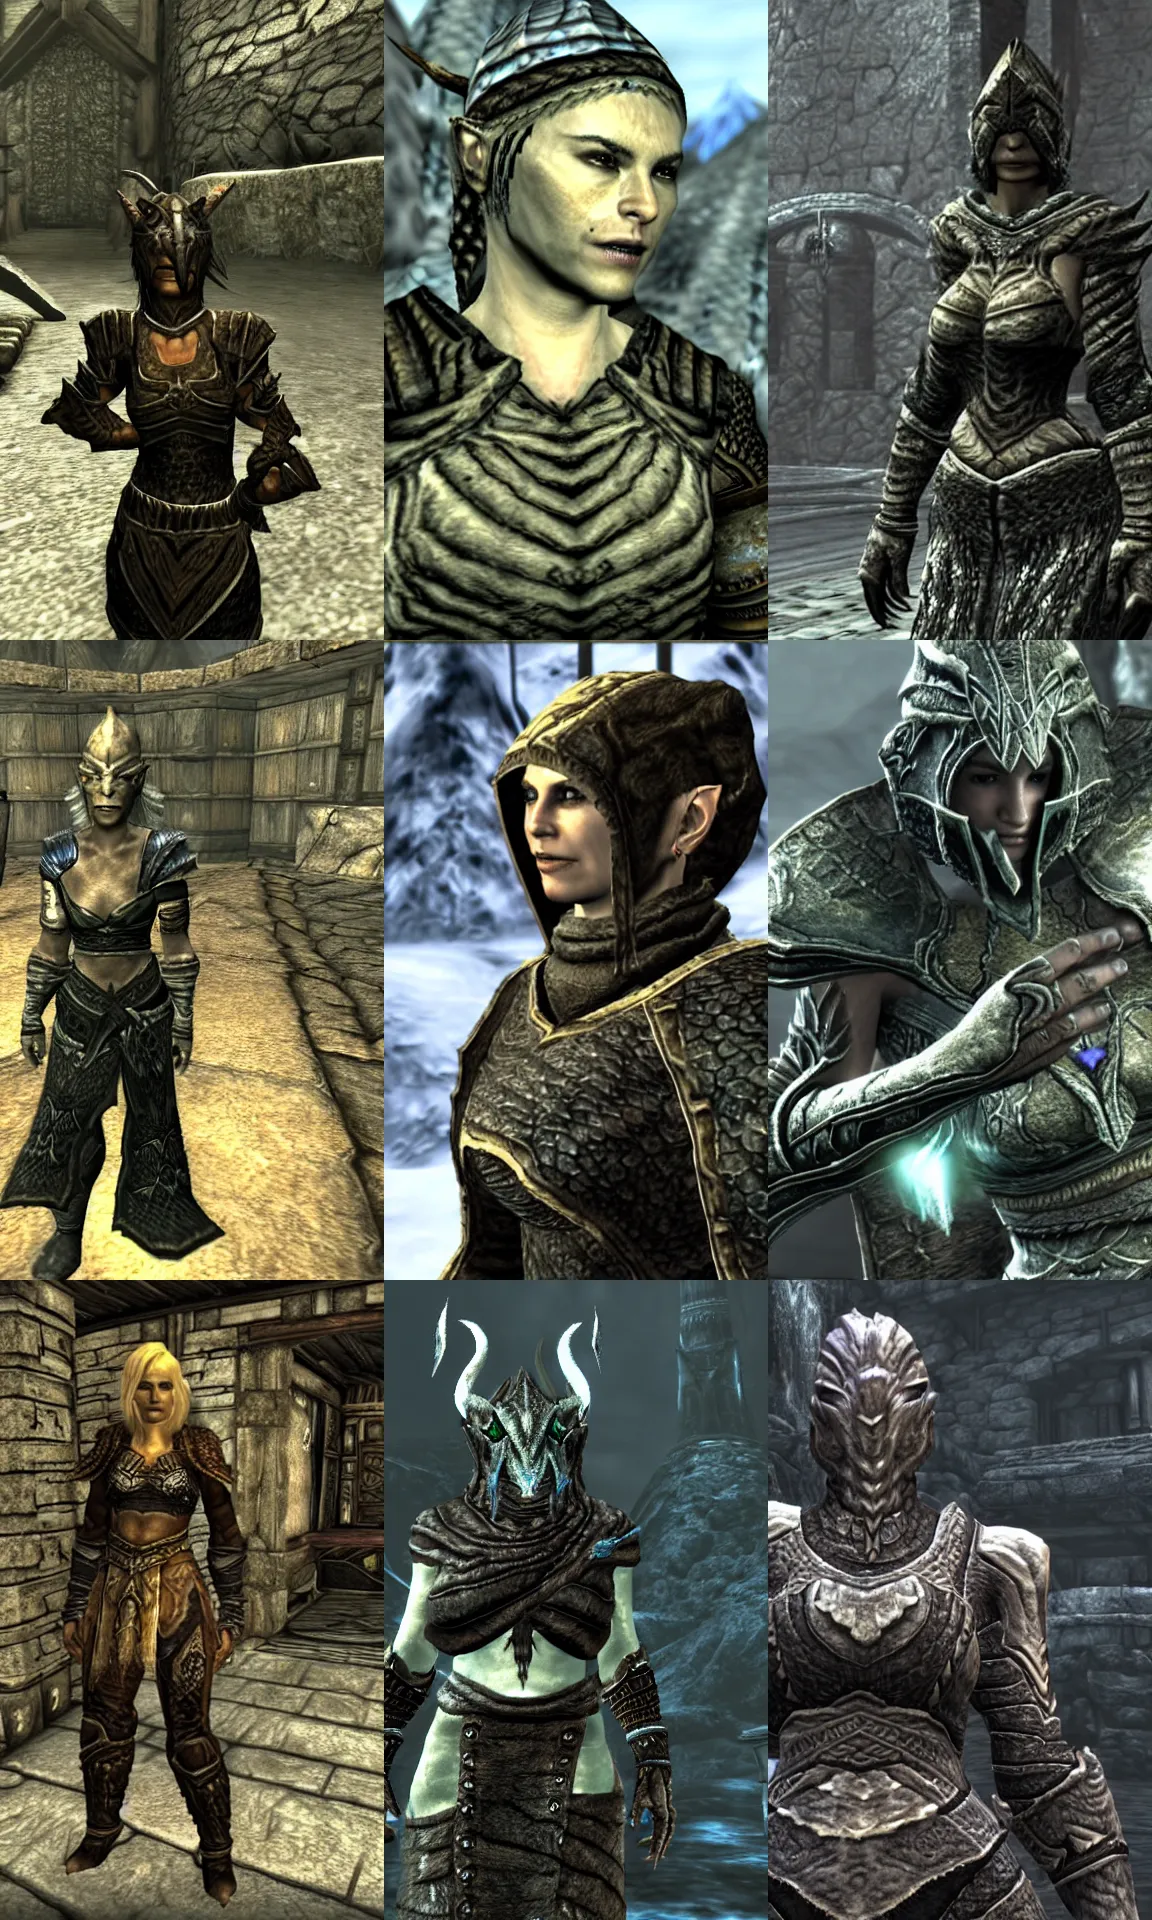 Prompt: Female Dragonborn, screenshot from the game 'Elder Scrolls: Skyrim'